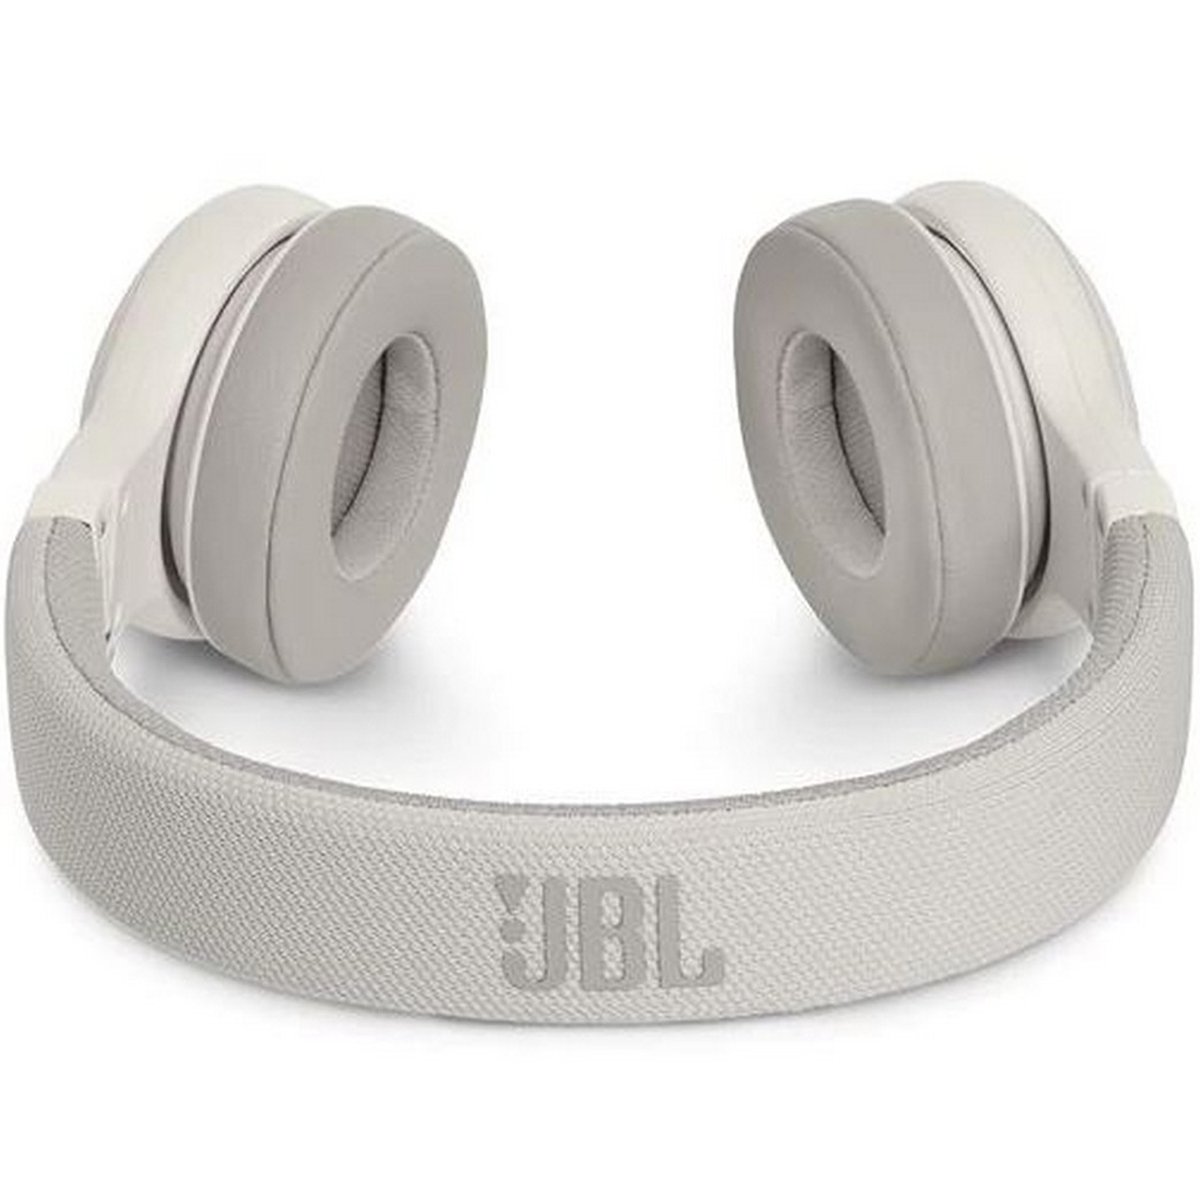 JBL Wireless On-Ear Headphone E45BT White